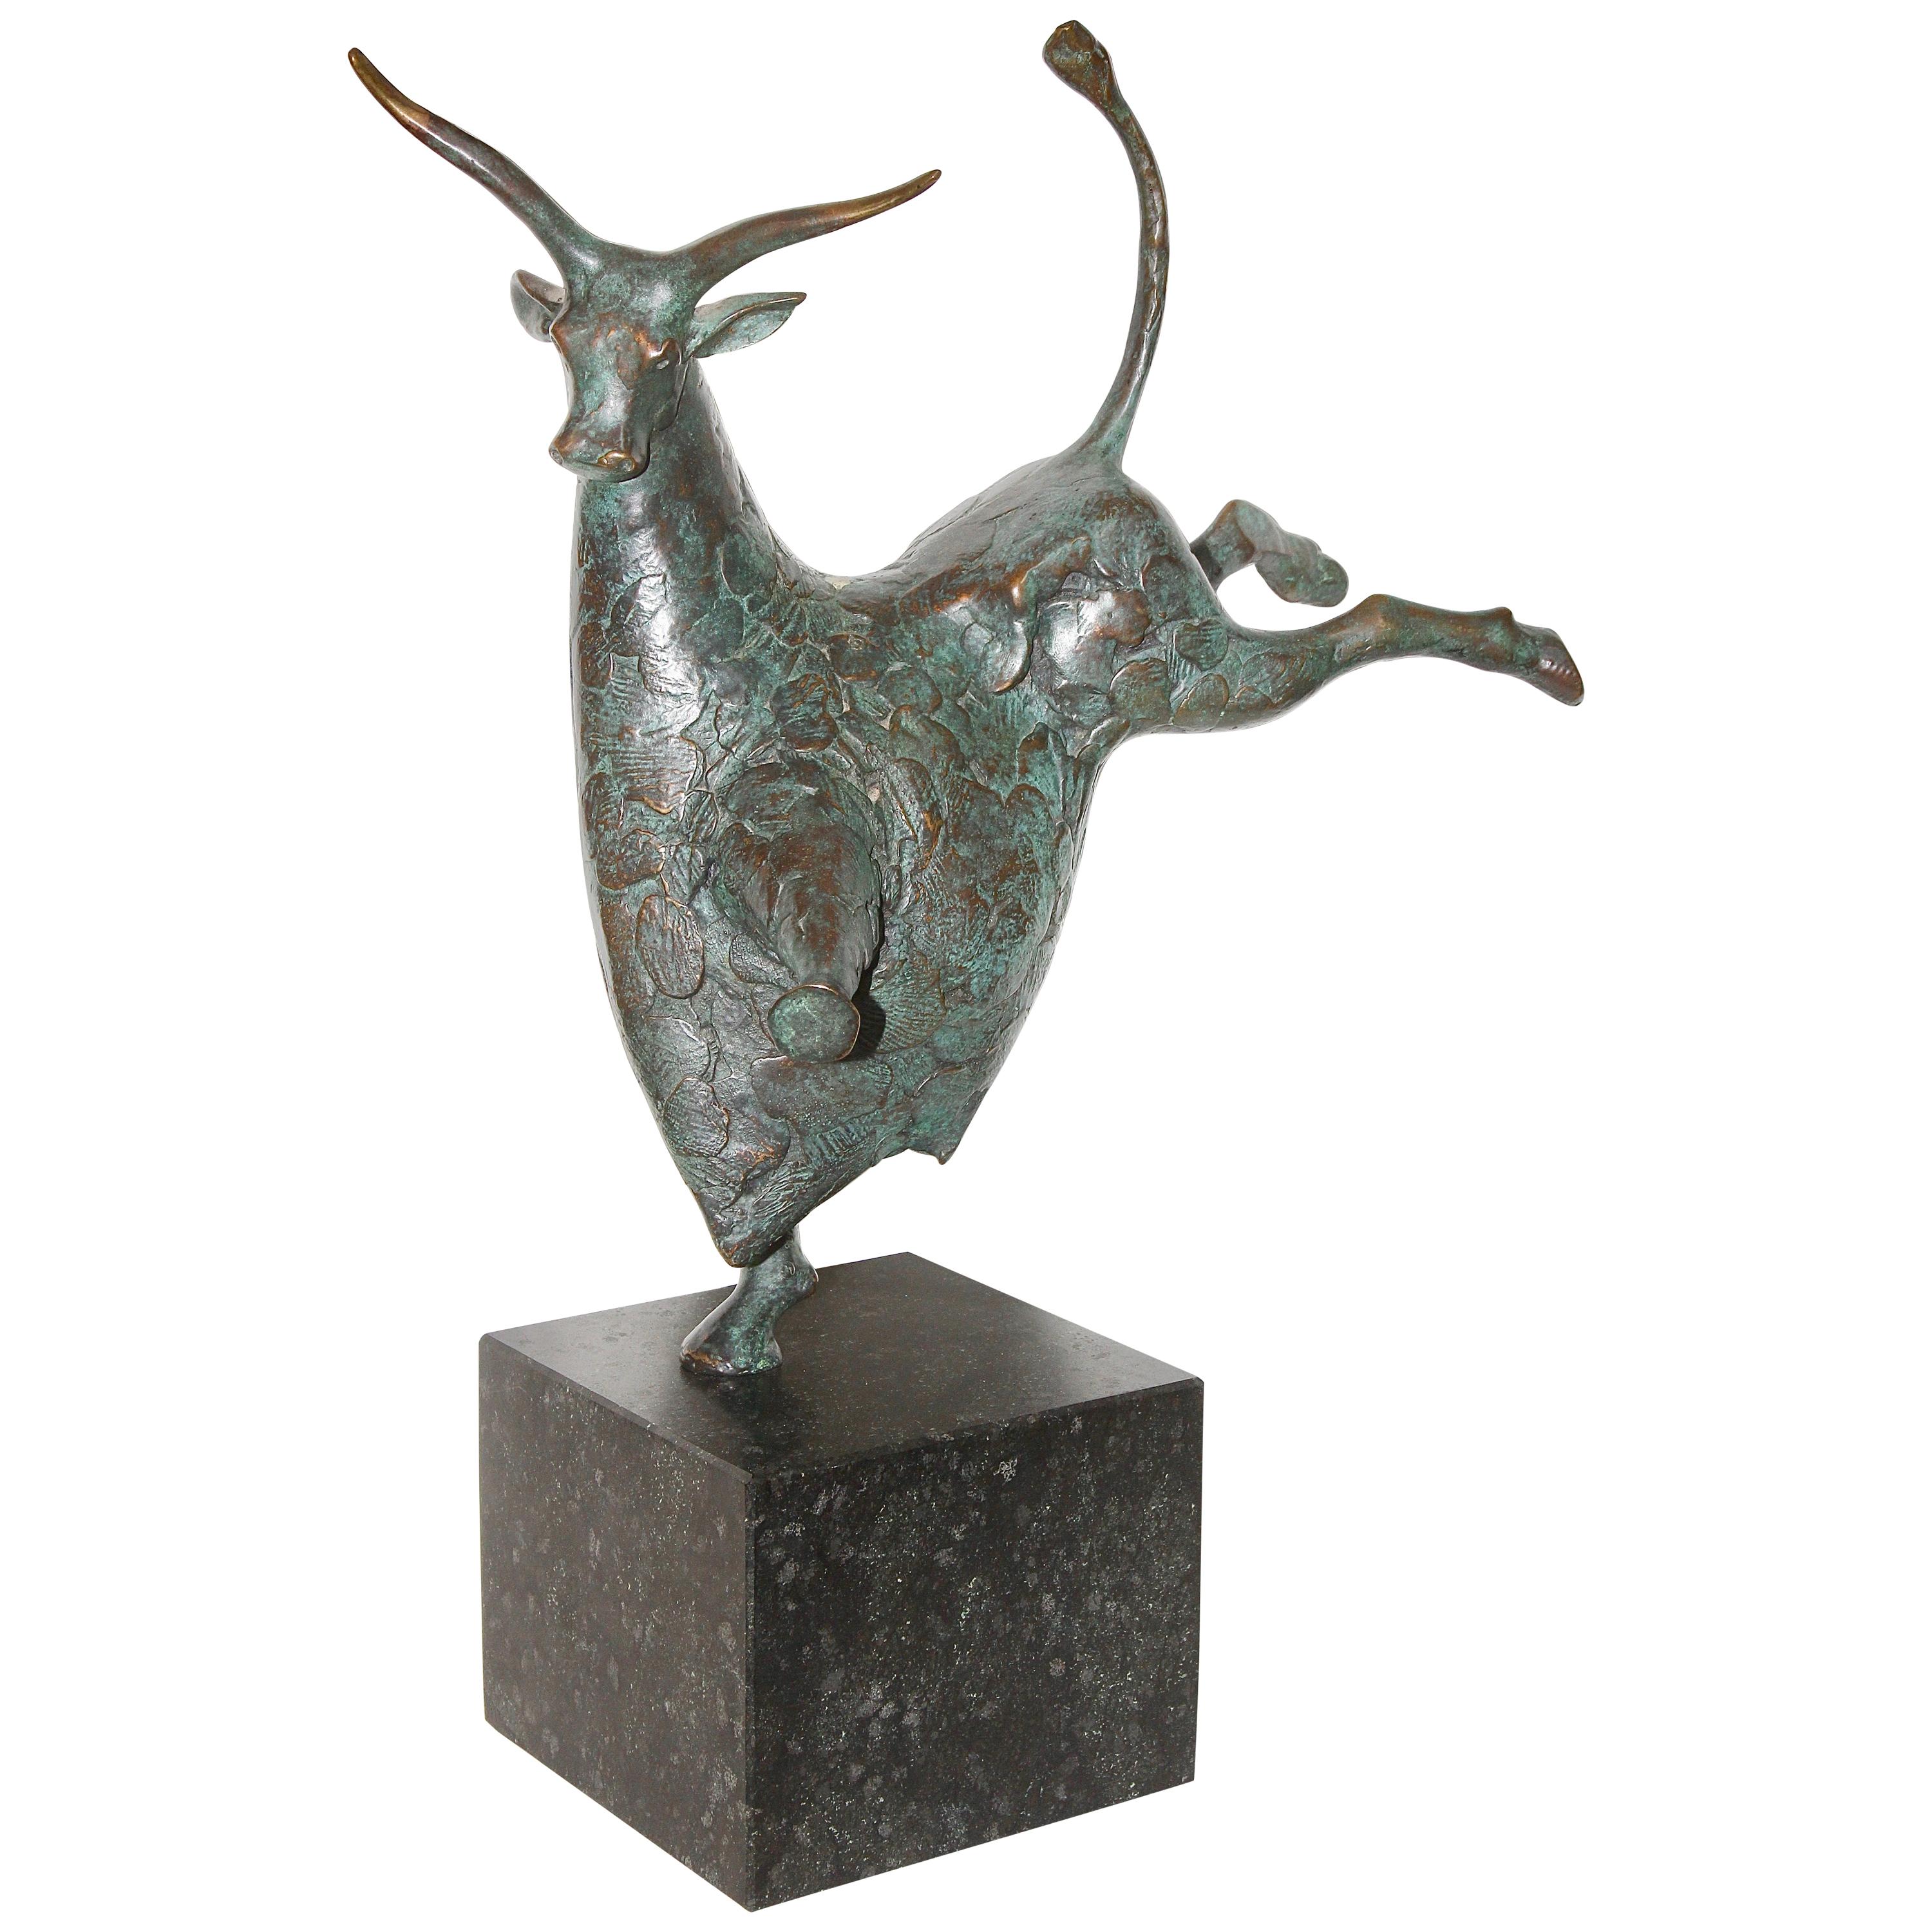 Evert Den Hartog "The Bull" Decorative, Contemporary Sculpture, Bronze on Marble For Sale